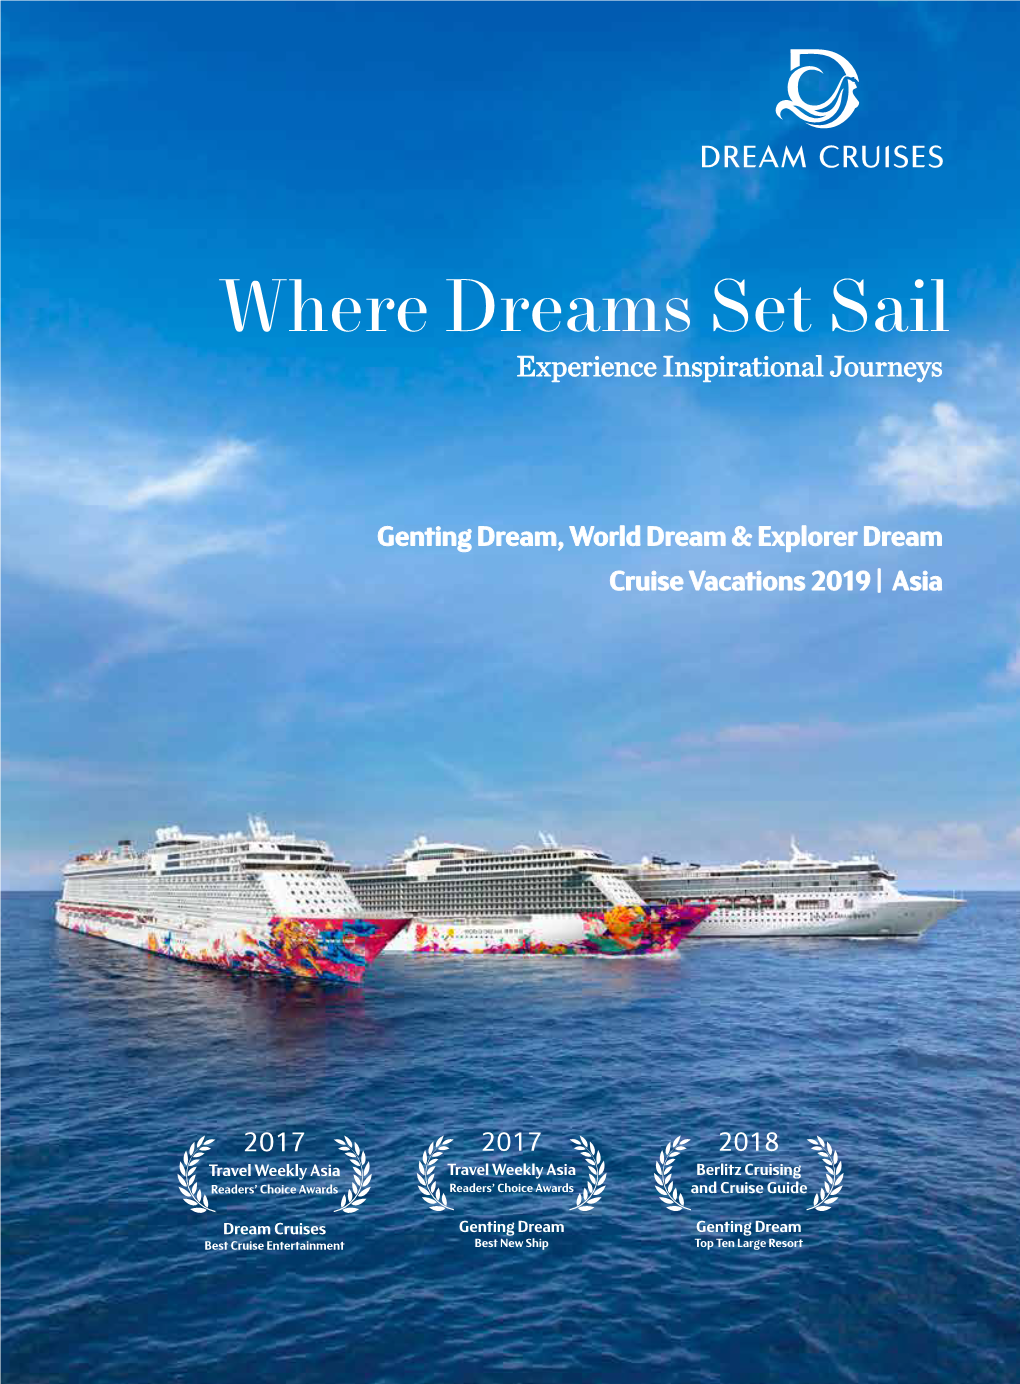 Genting Dream, World Dream & Explorer Dream Cruise